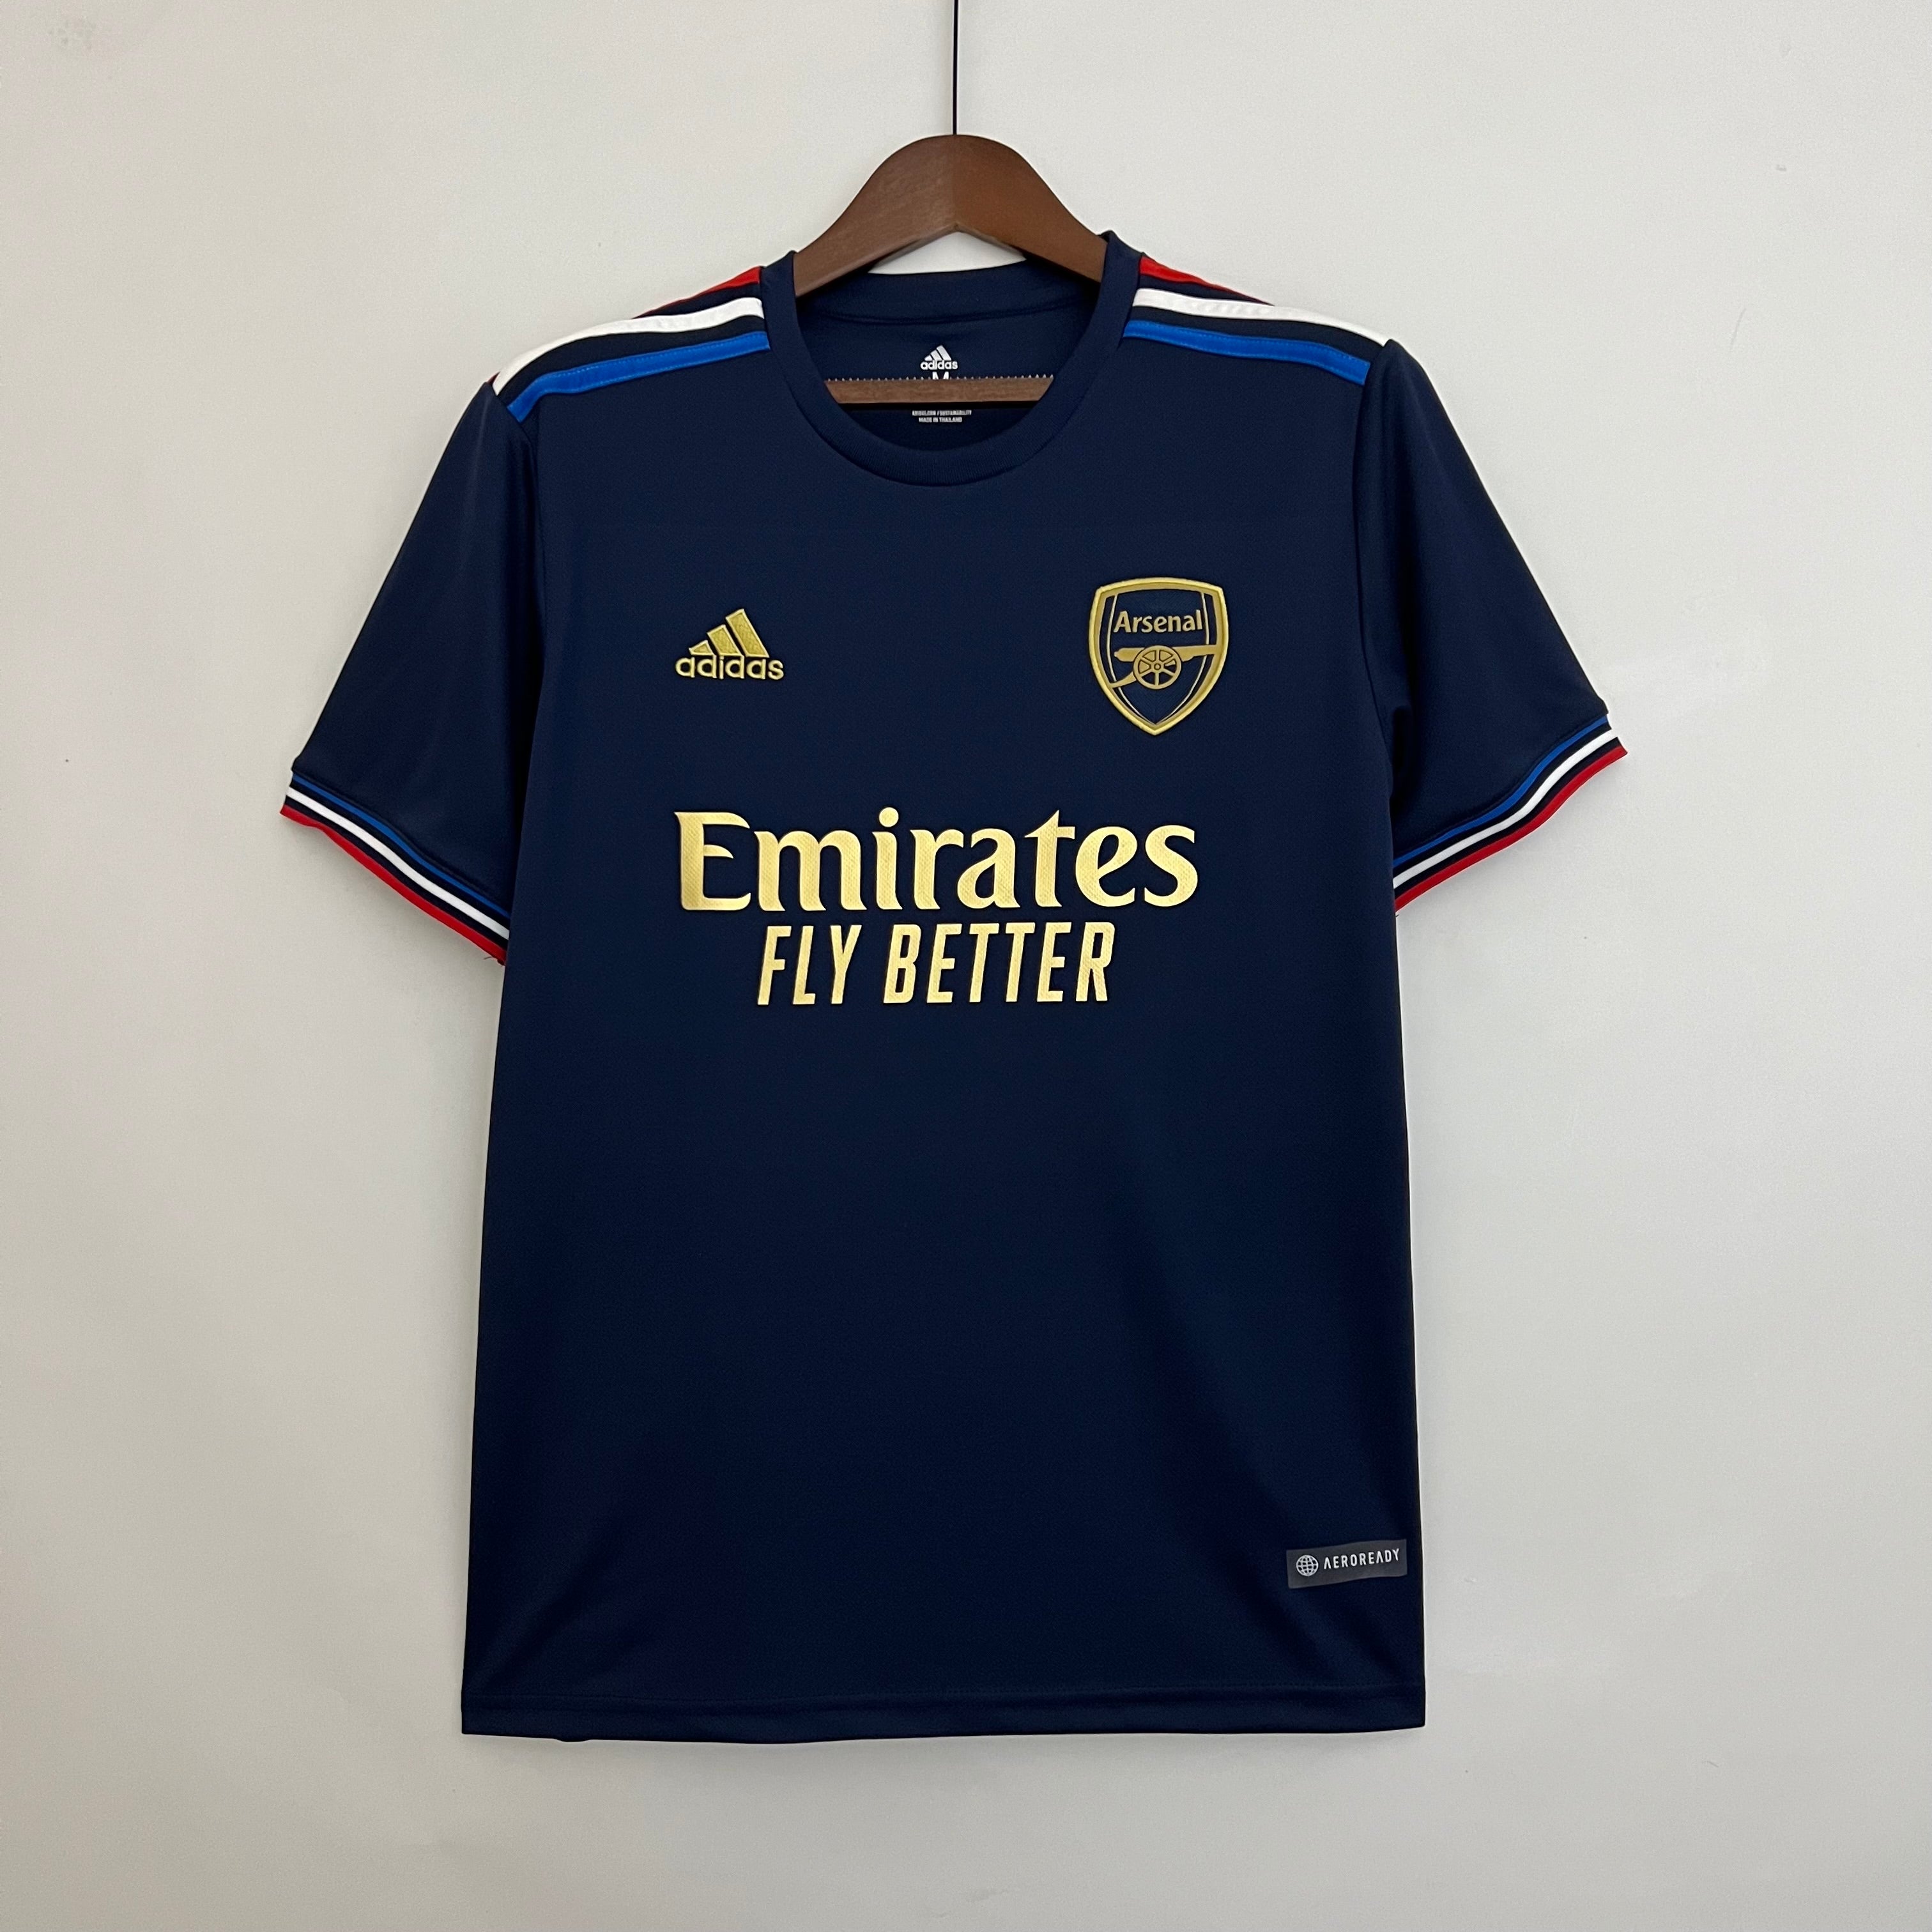 Arsenal France Joint Kit